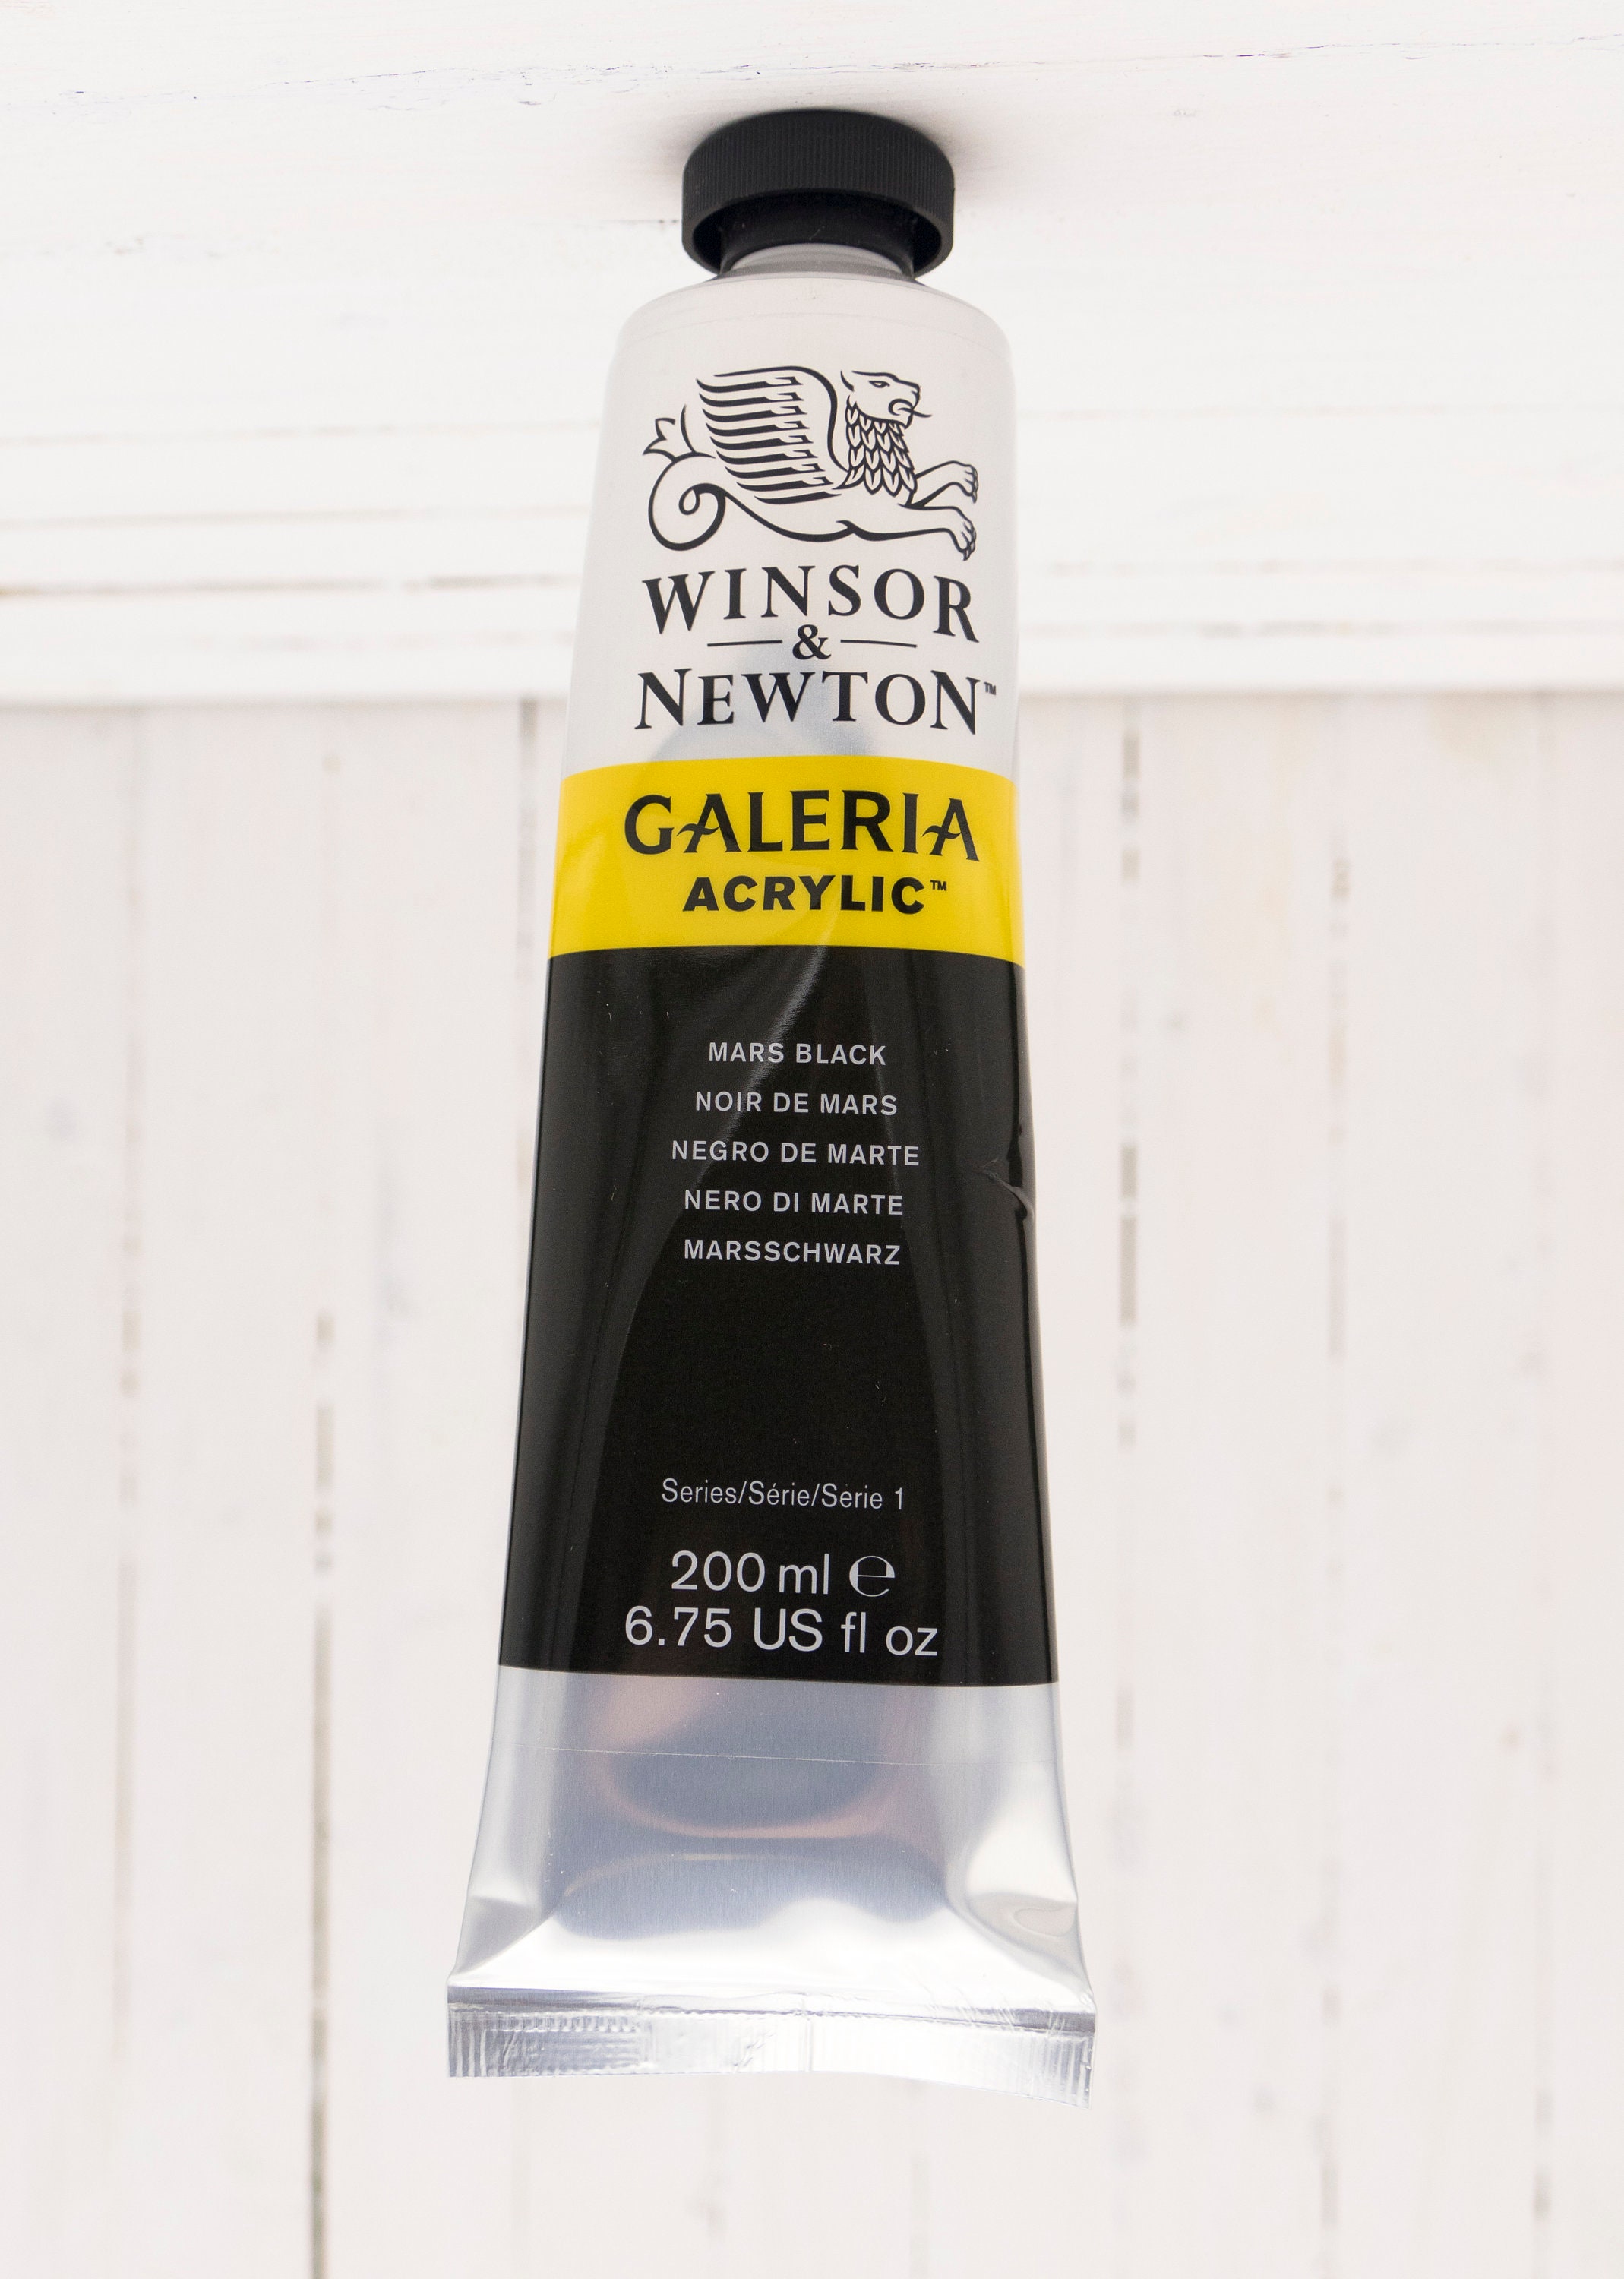 Winsor & Newton Mars Black Galeria Acrylic Paint 200ml Tube 200-ml